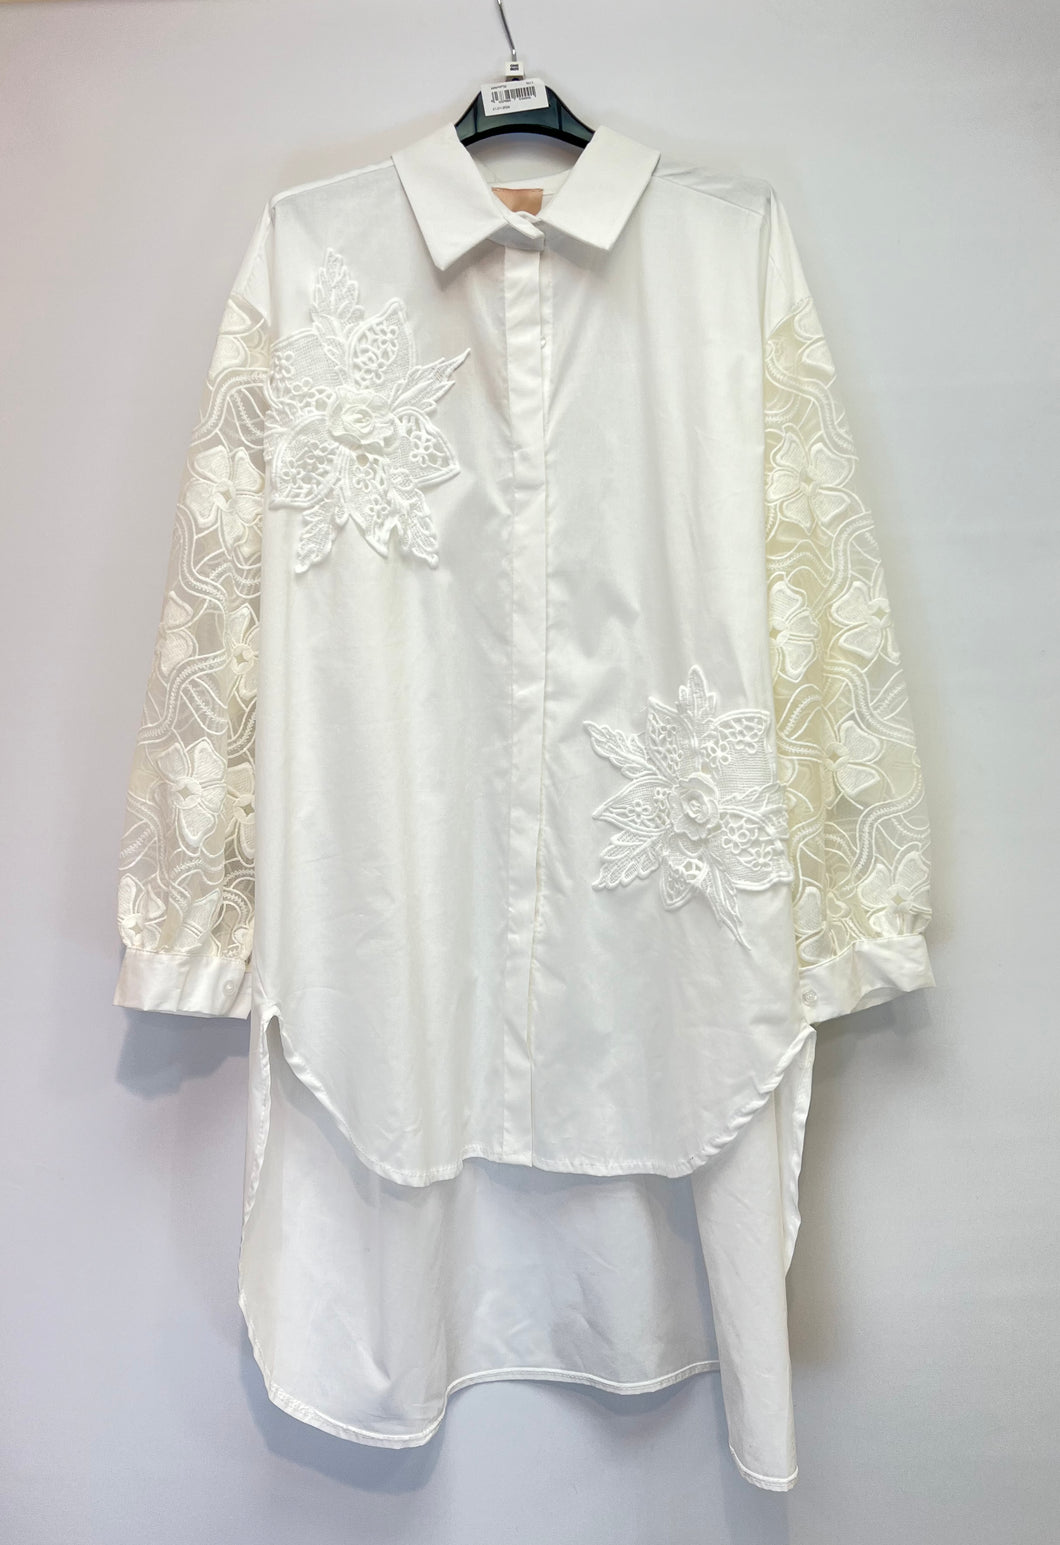 Flower lace sleeve shirt